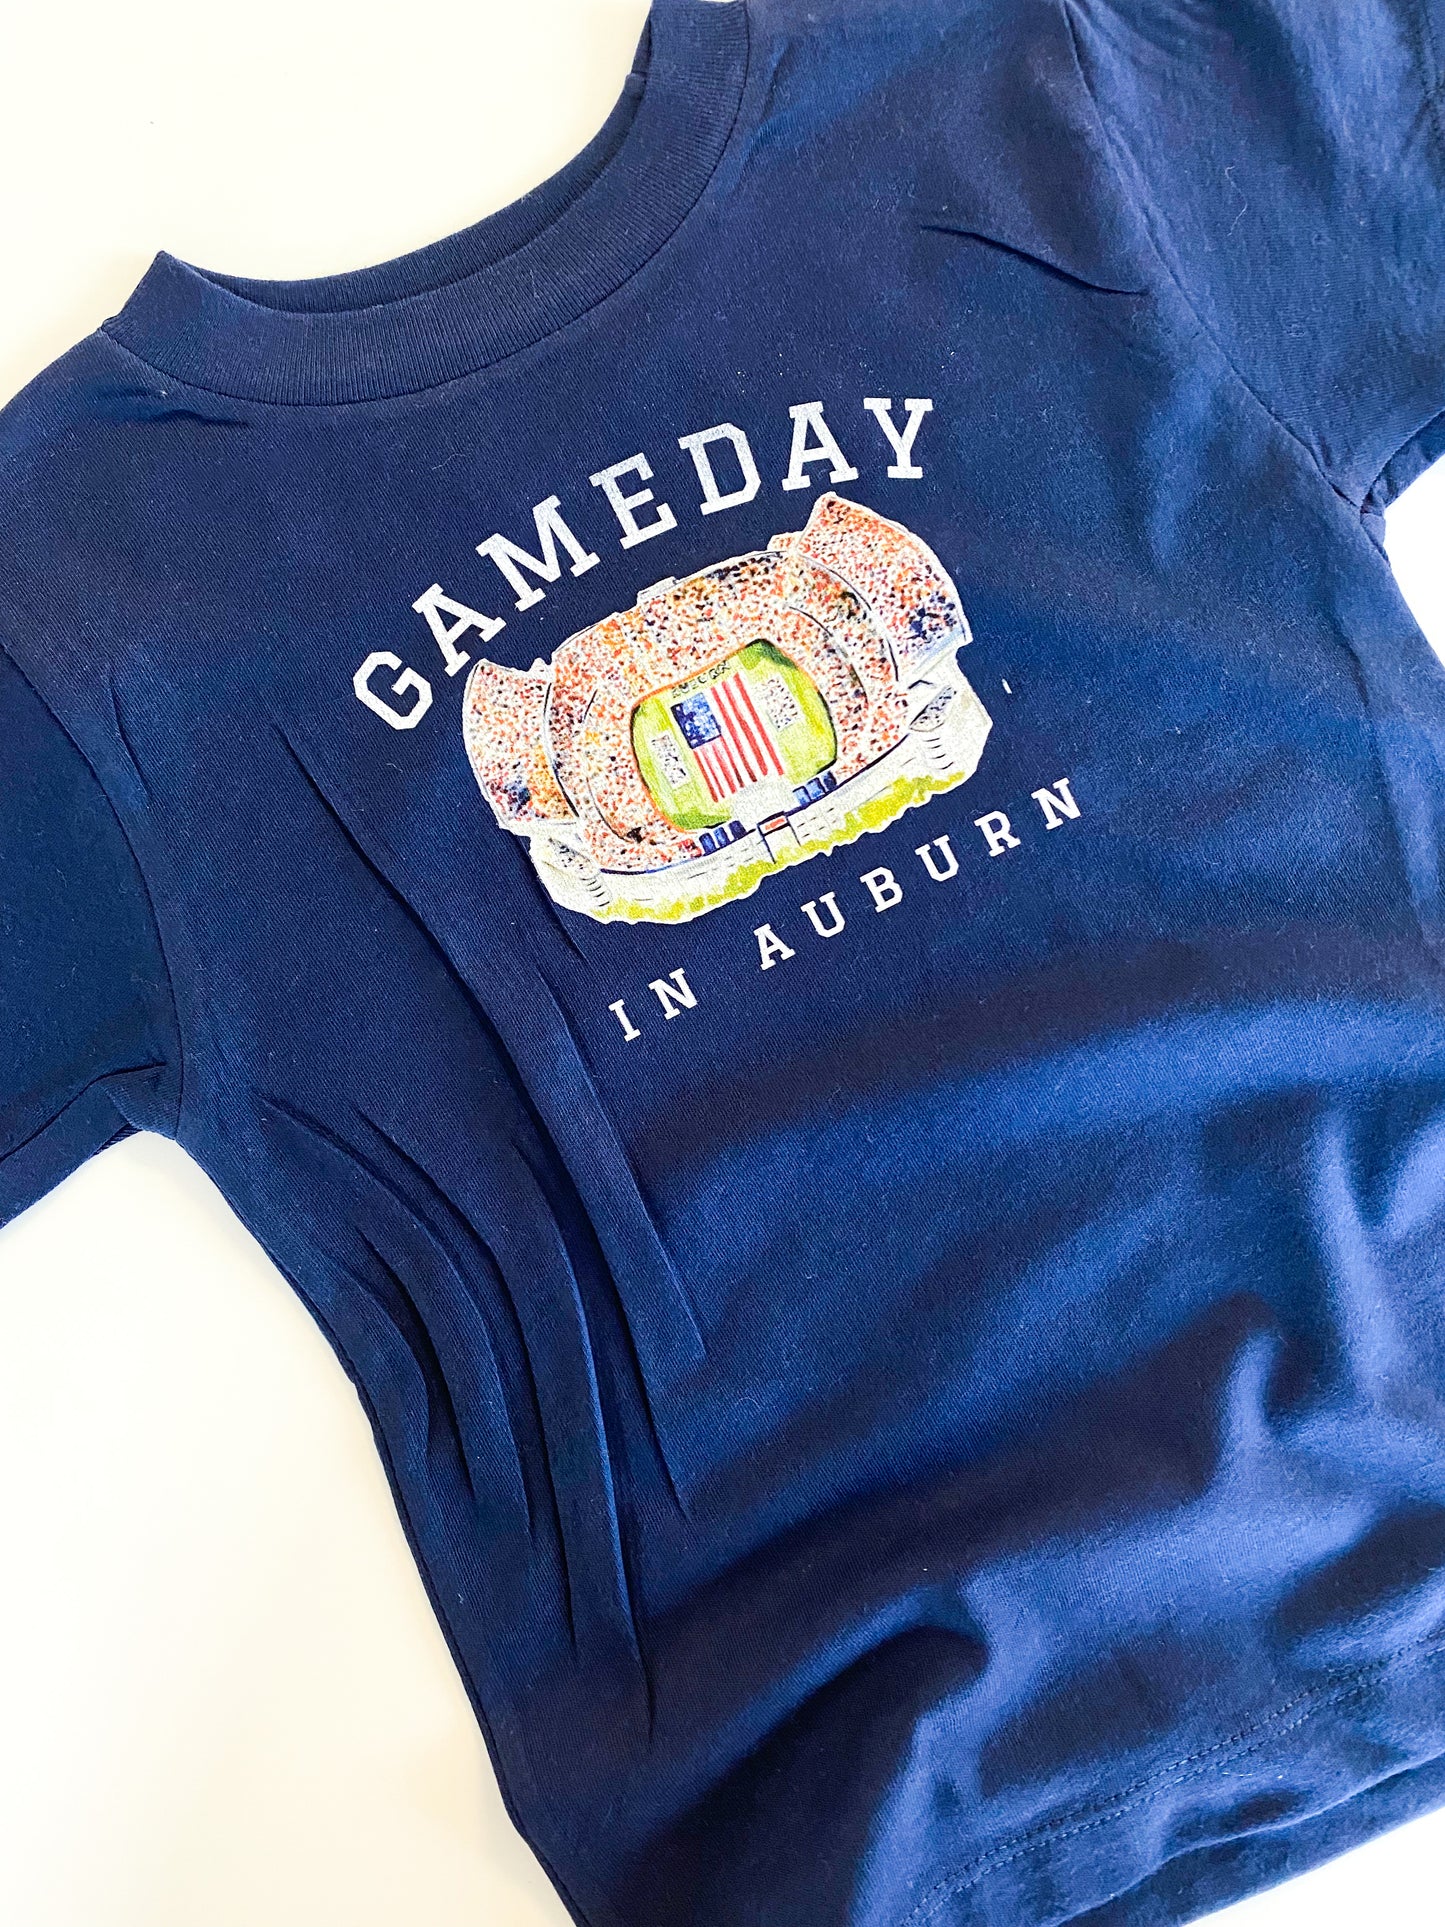 Auburn Stadium | Kids Tee-Kids Tees-Sister Shirts-Sister Shirts, Cute & Custom Tees for Mama & Littles in Trussville, Alabama.